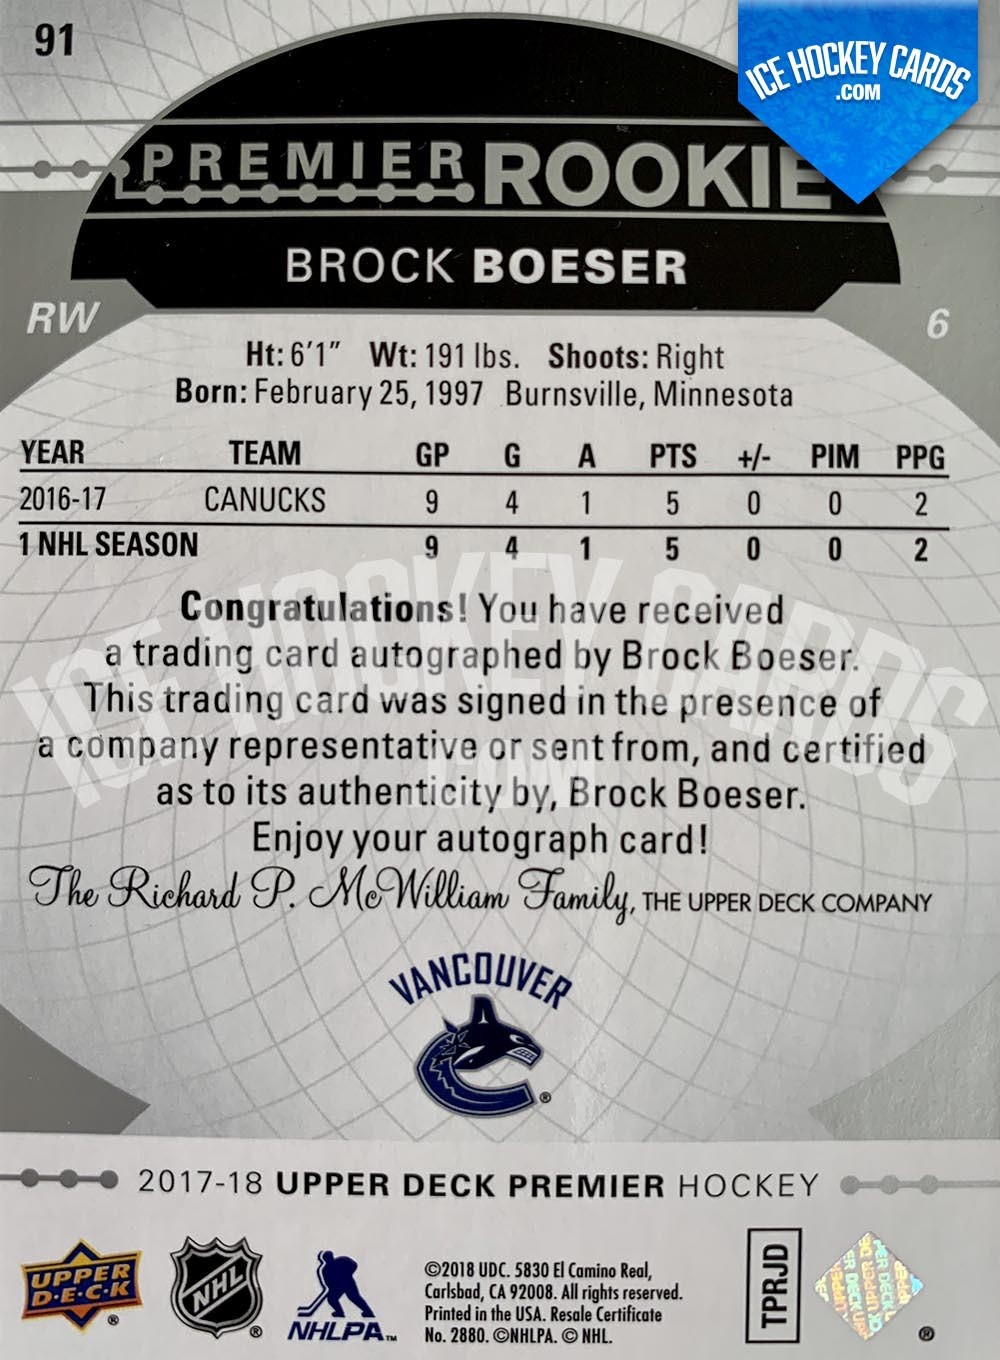 Upper Deck - Premier Hockey 2017-18 - Brock Boeser Premier Rookie Autograph Card back